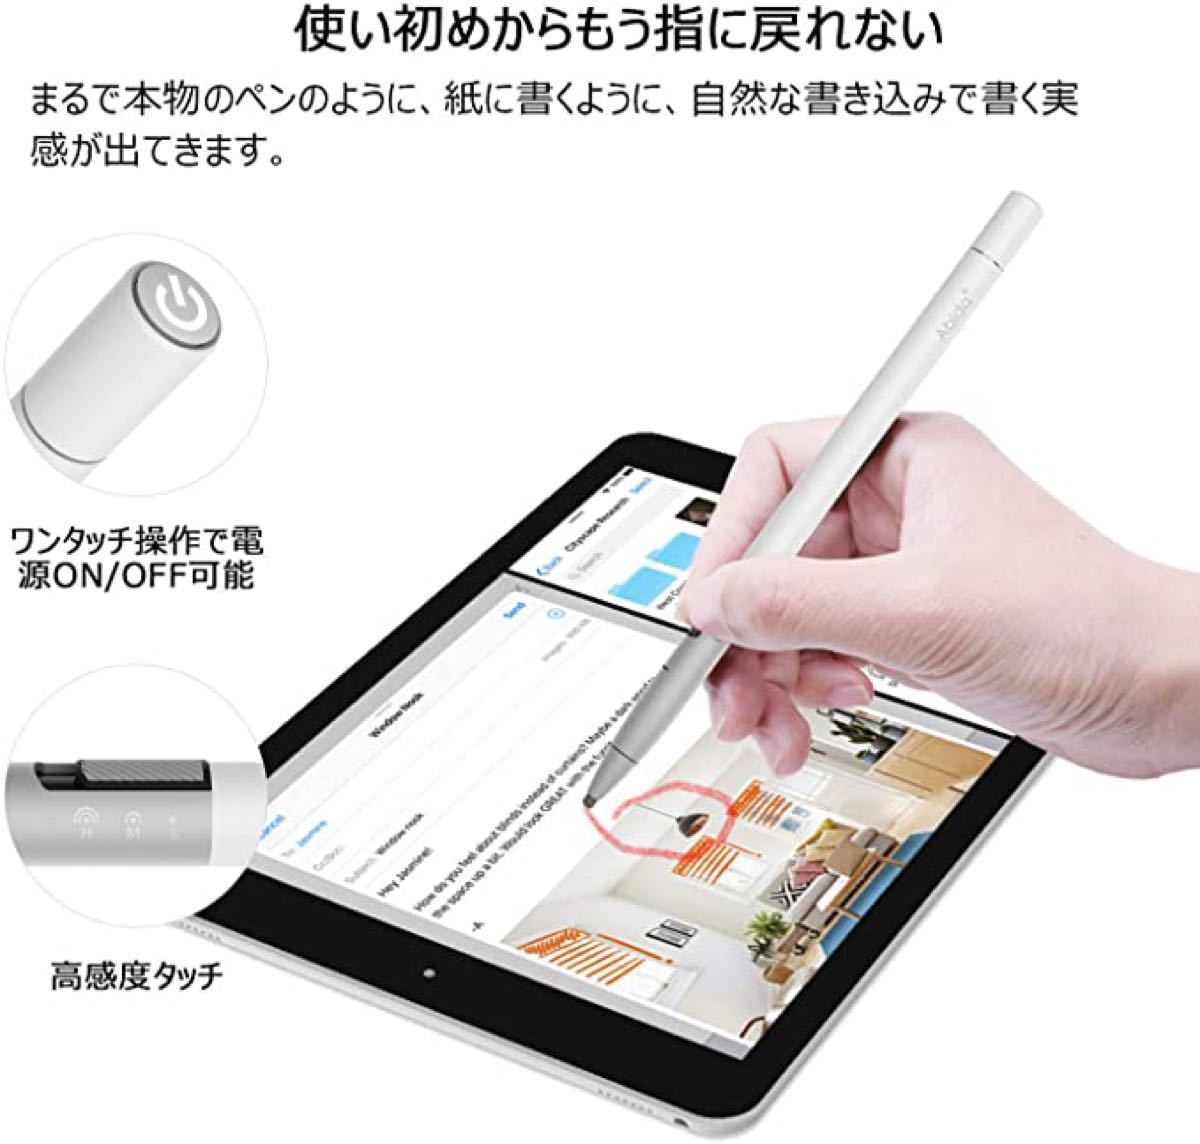 iPad iPhone Samsung Android対応タッチペン 高感度 高精度 感度調整 5分間自動オフ 優れたペン先 白